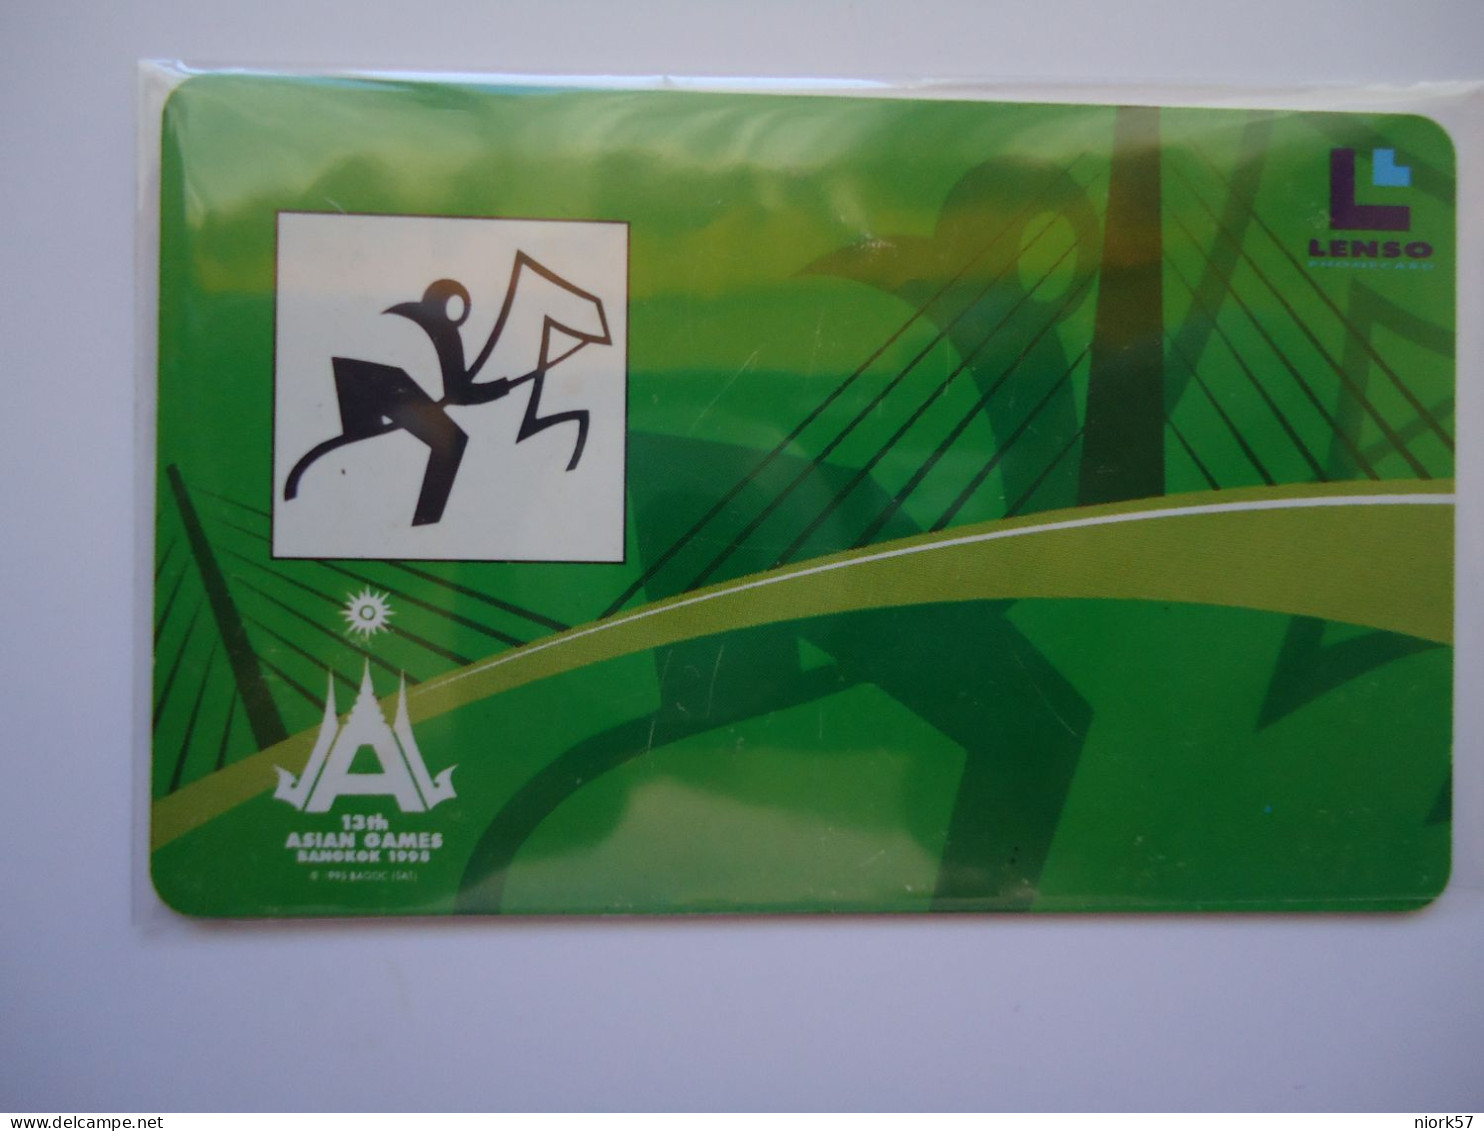 THAILAND CARDS LENSO  SPORTS 13TH ASIAN GAMES BANGKOK 1998  64/300 - Sport